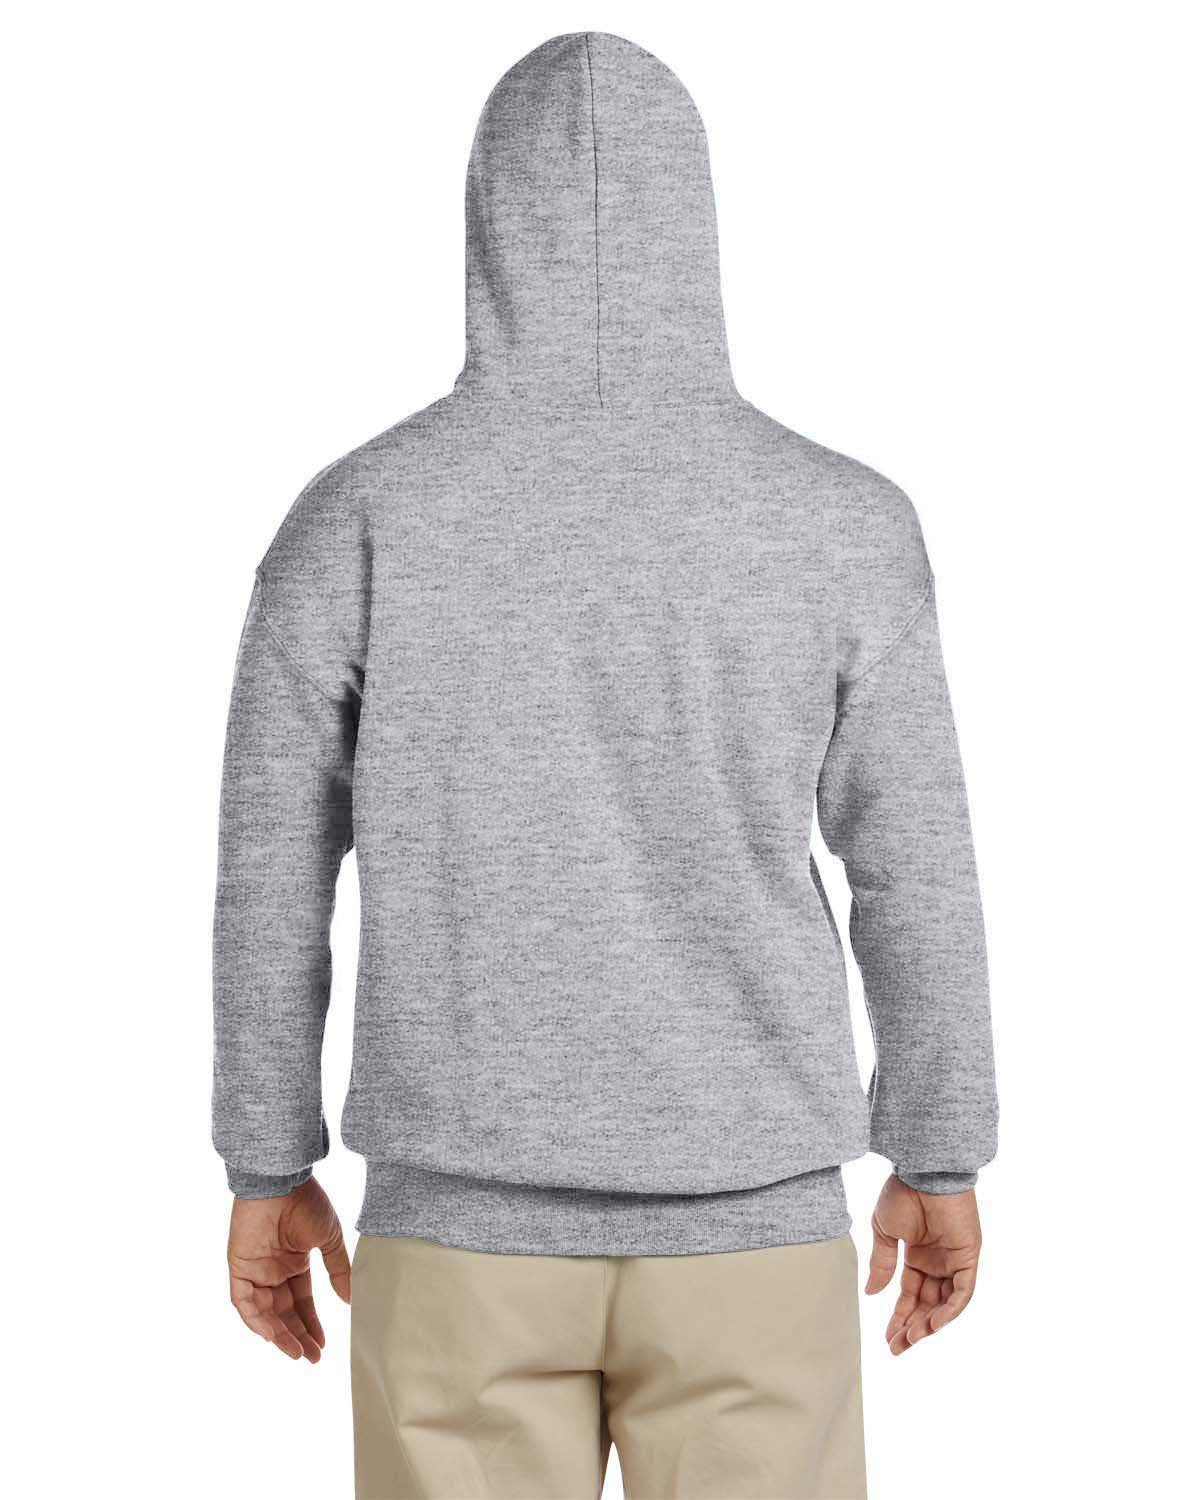 Graphite Heather - Gildan 18500 Heavy Blend Hooded Sweatshirt